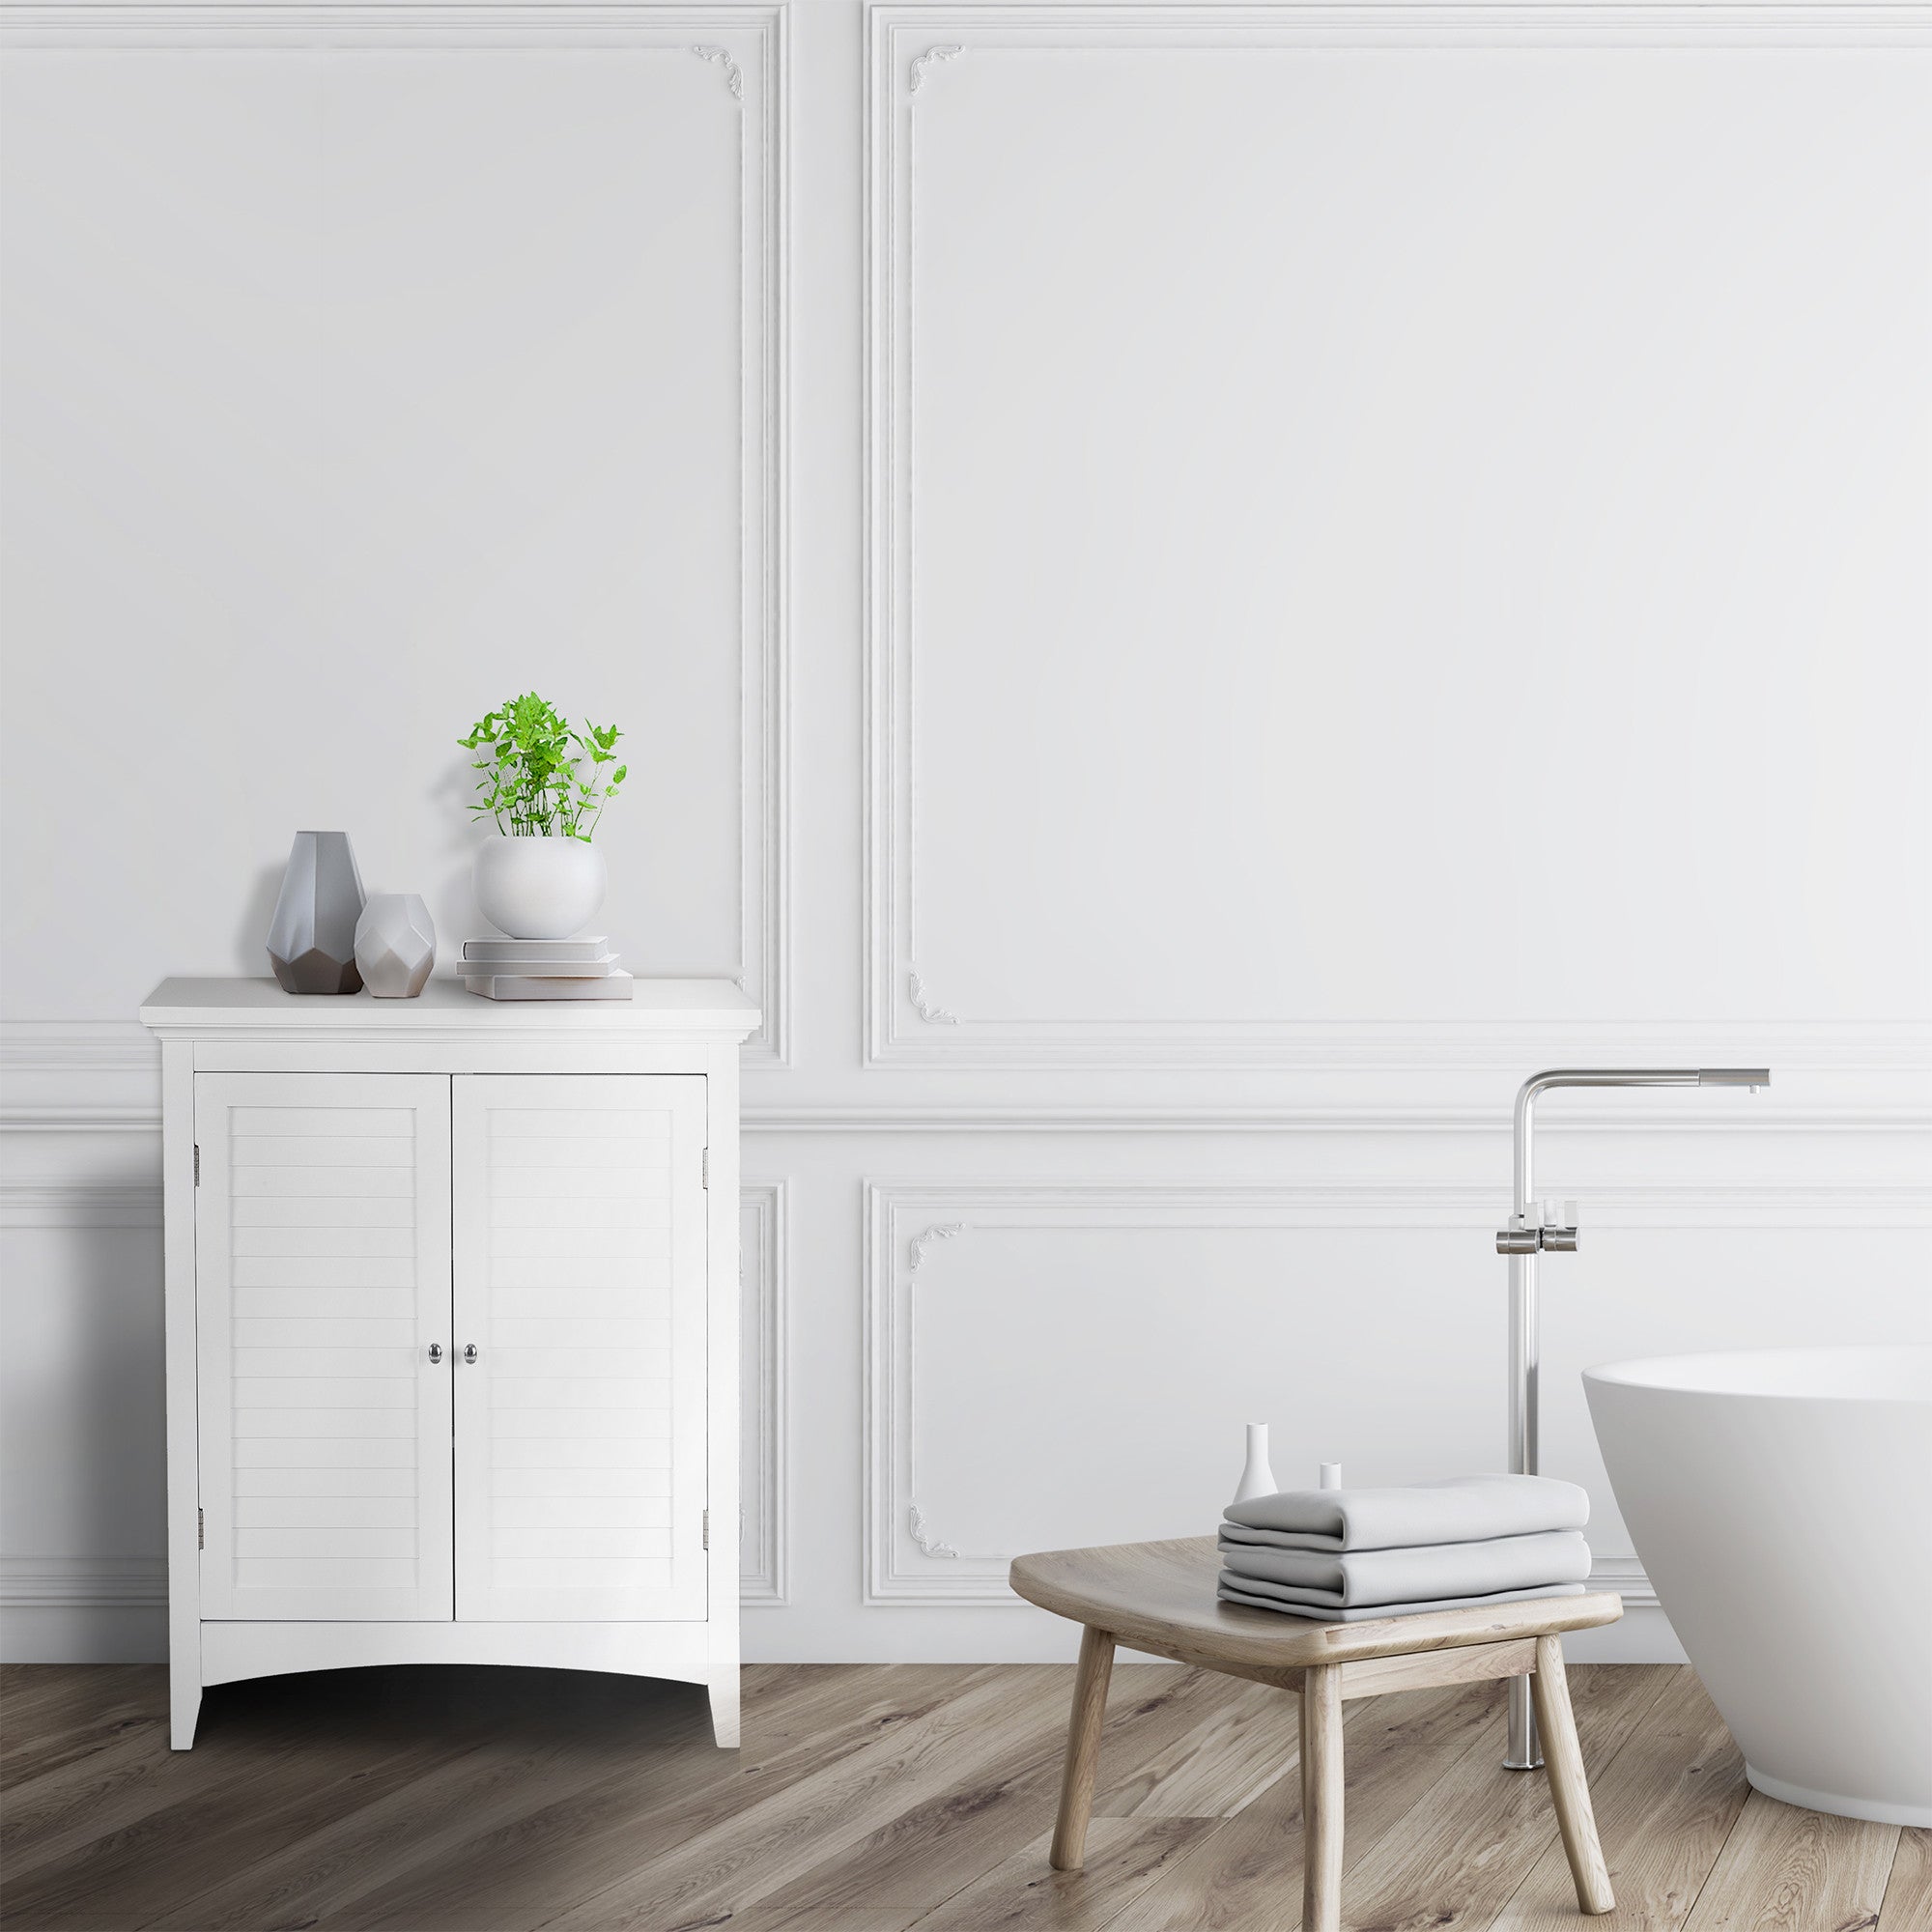 Teamson Home Glancy Wooden Floor Cabinet with Shutter Doors, White